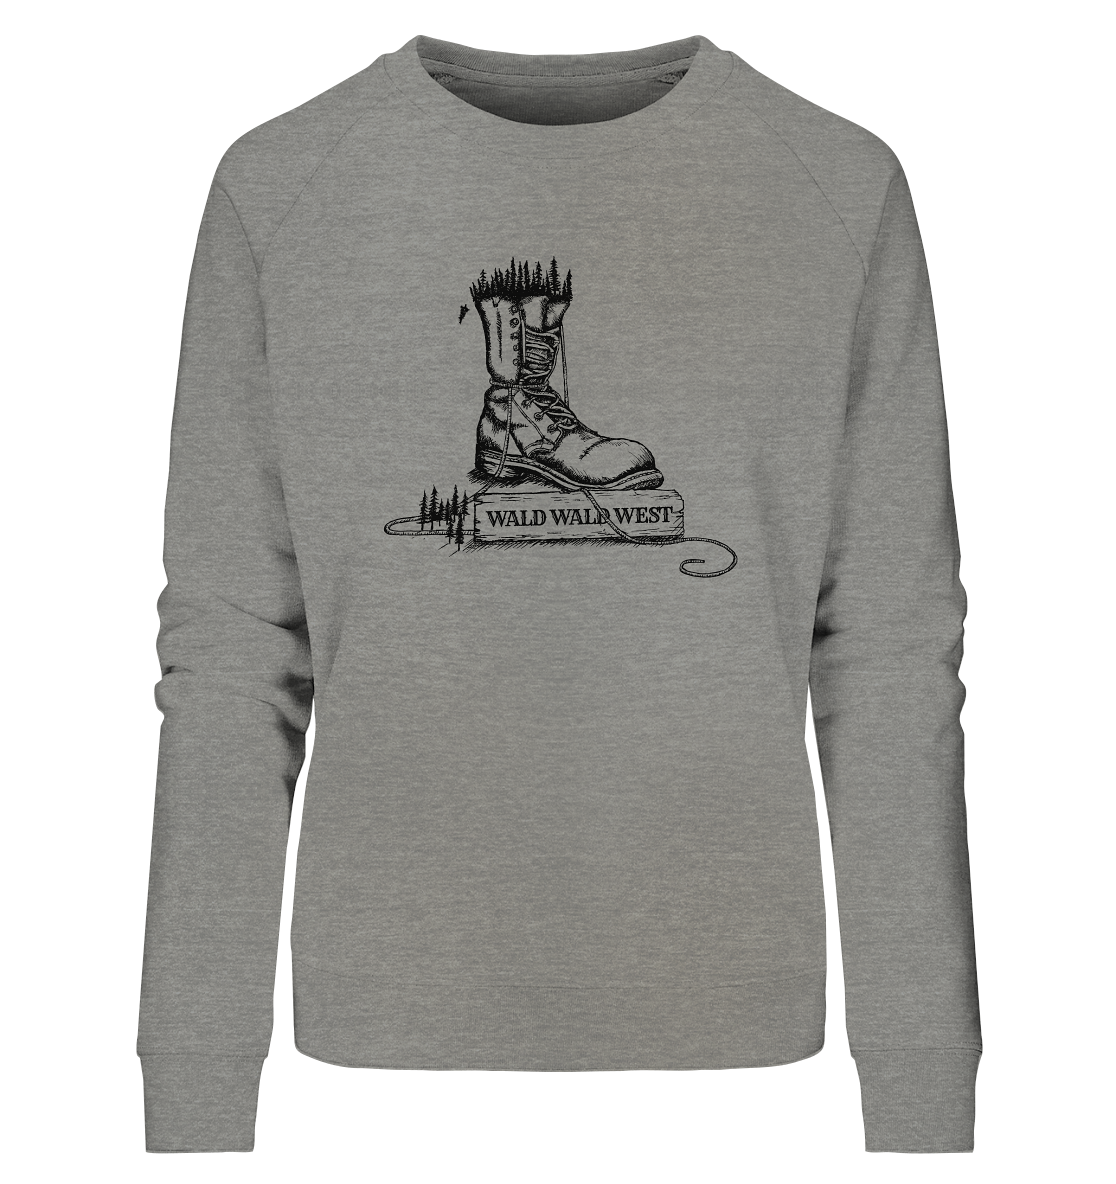 front-ladies-organic-sweatshirt-818381-1116x.png